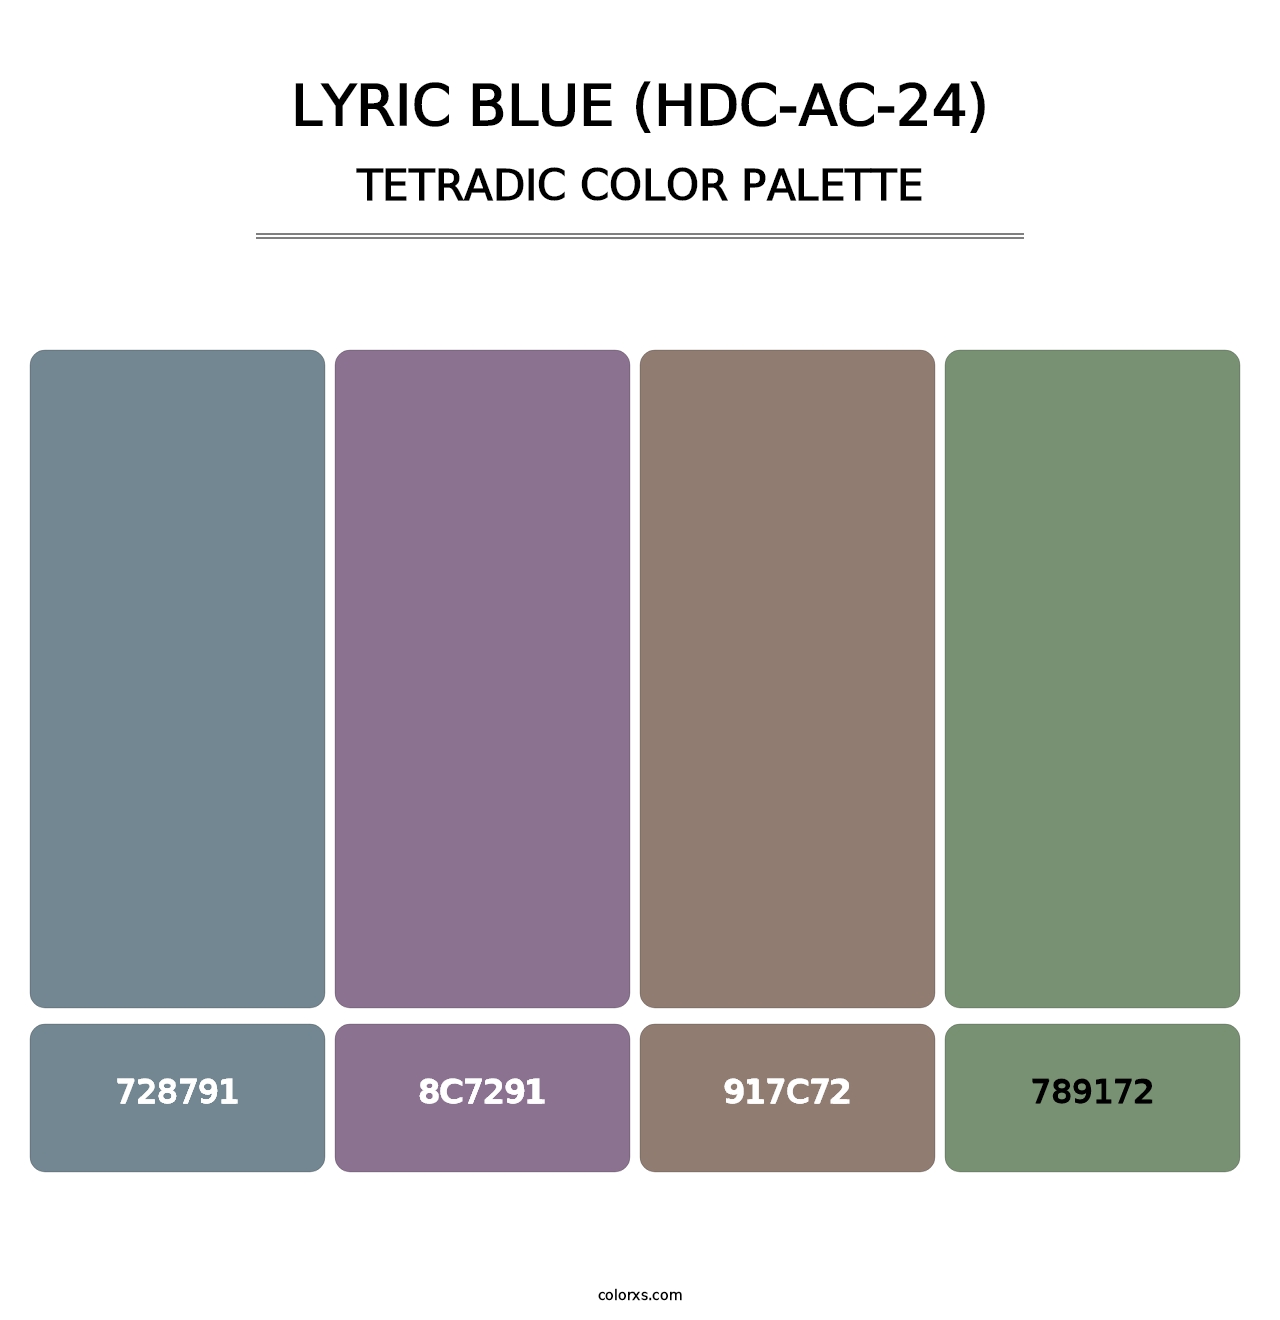 Lyric Blue (HDC-AC-24) - Tetradic Color Palette